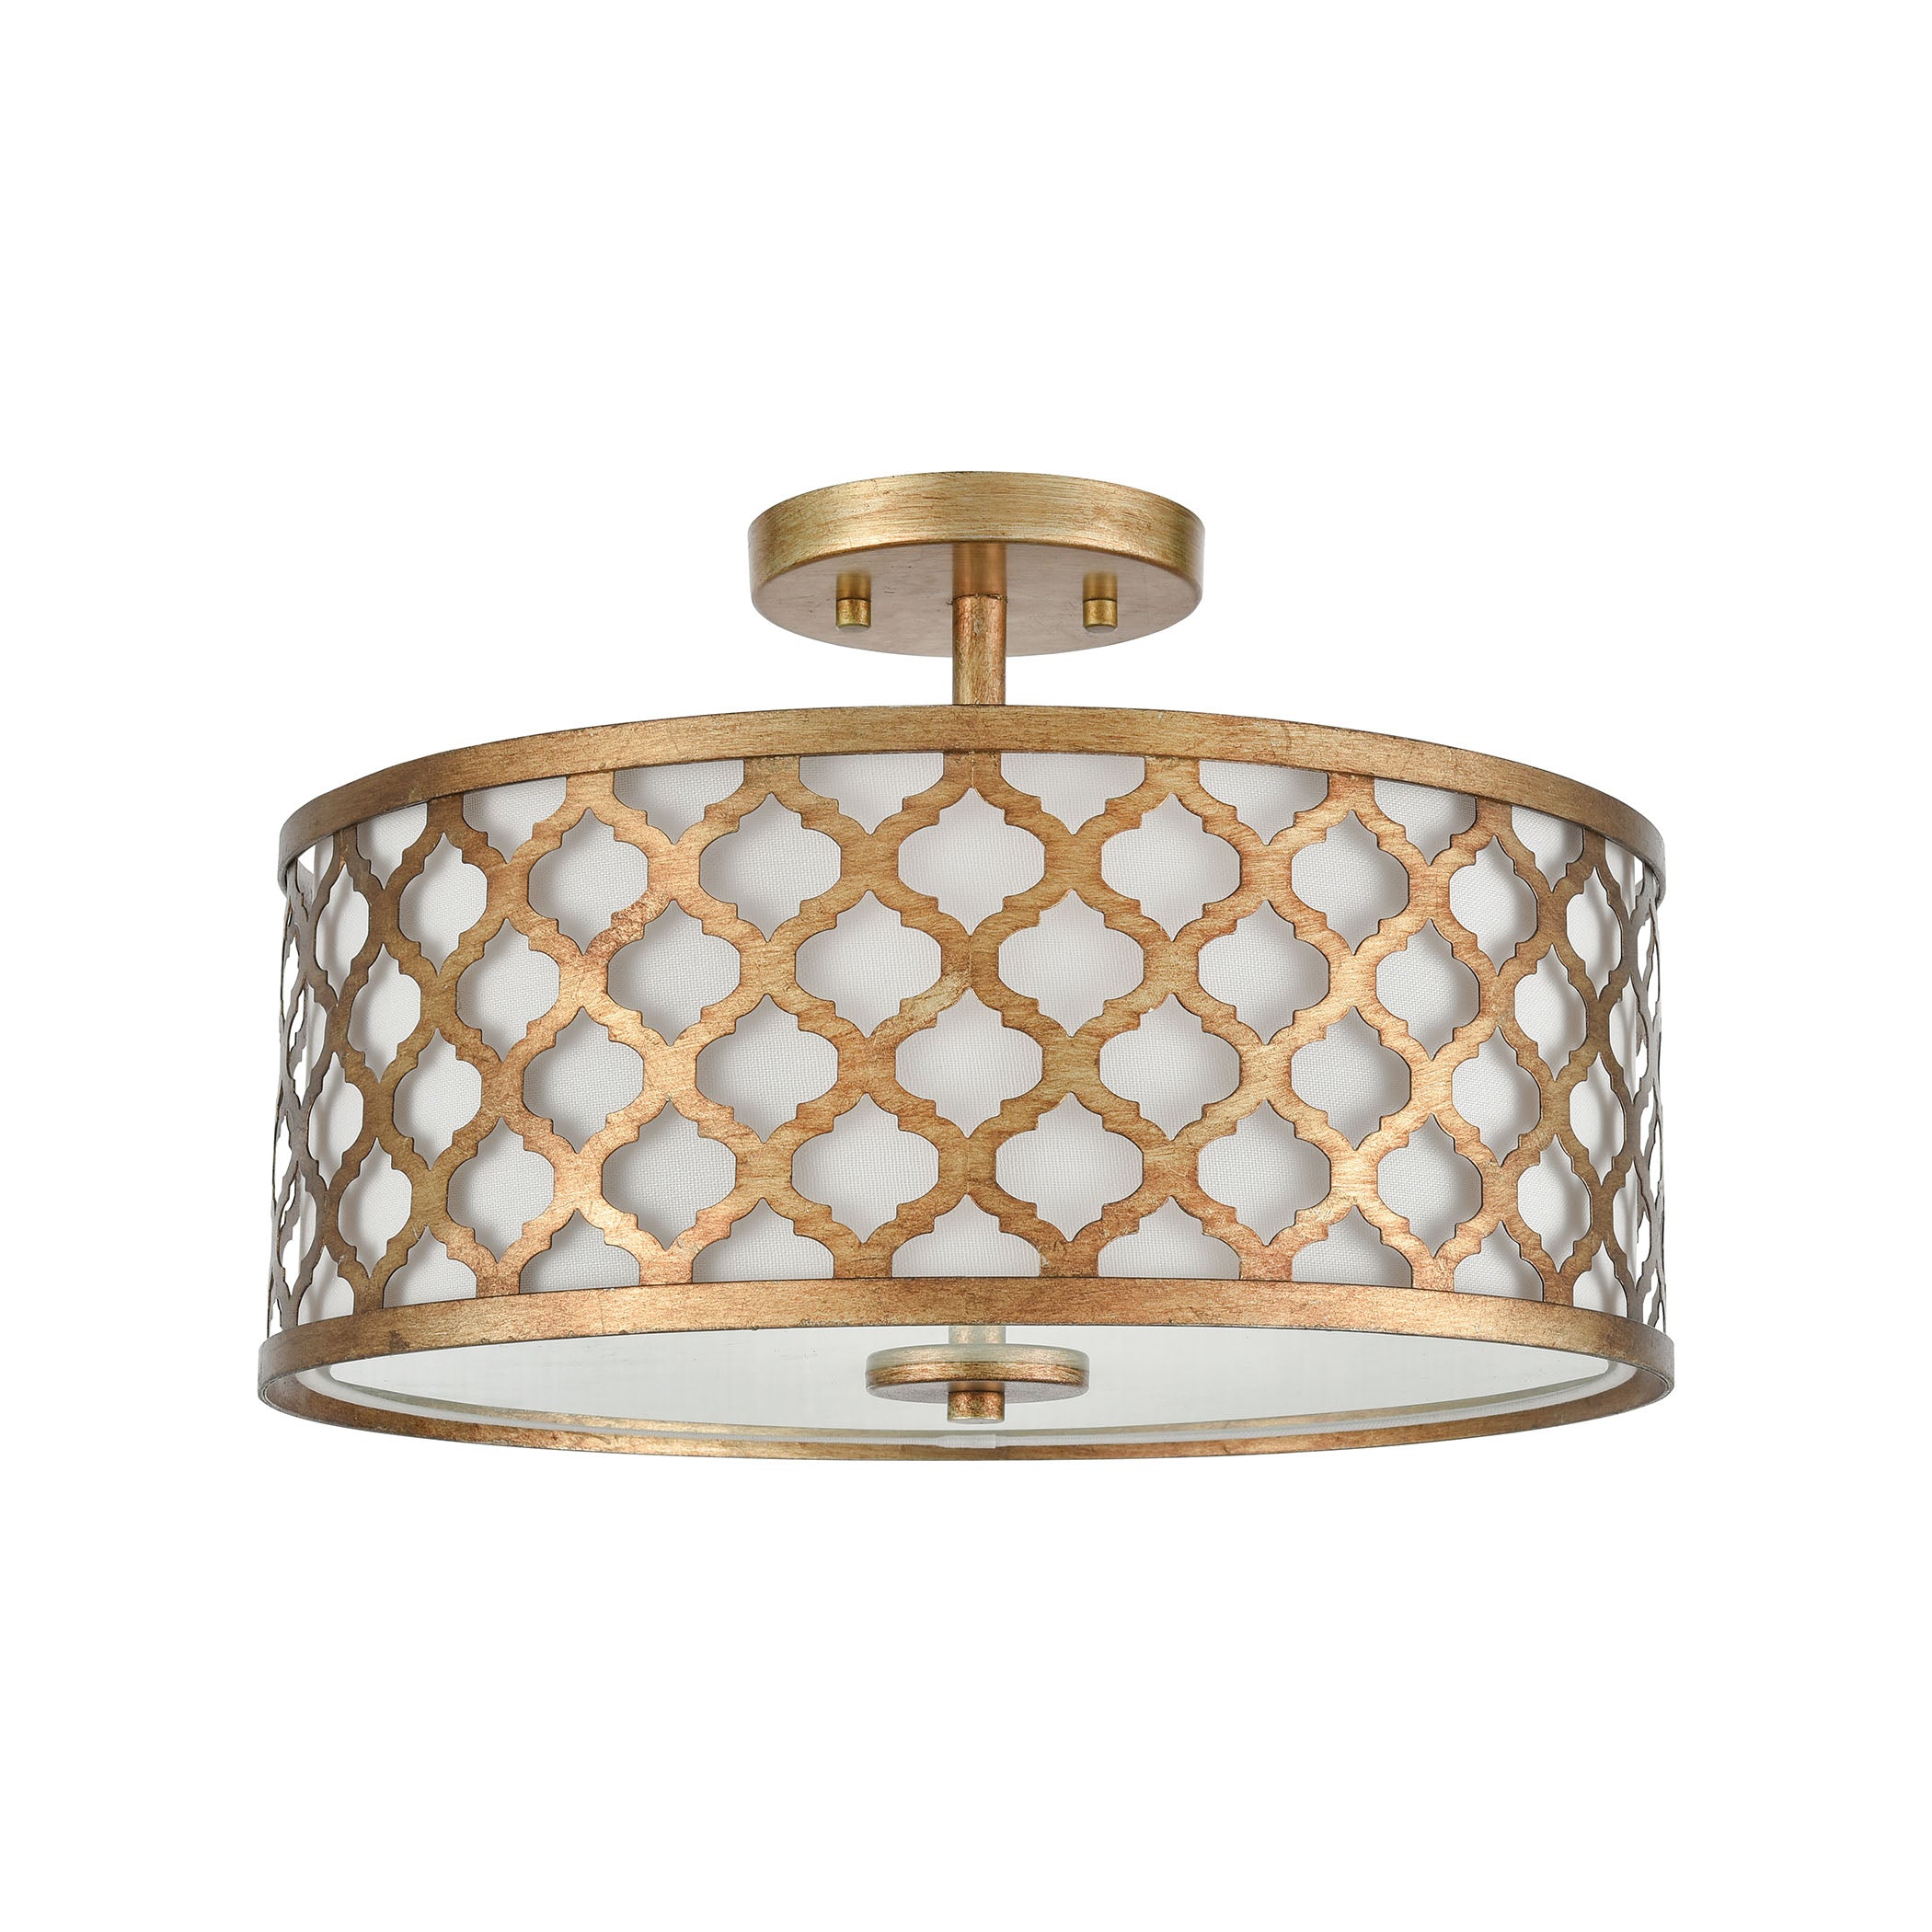 ELK Lighting 75135/3 Arabesque 3-Light Semi Flush in Bronze Gold with White Fabric Shade